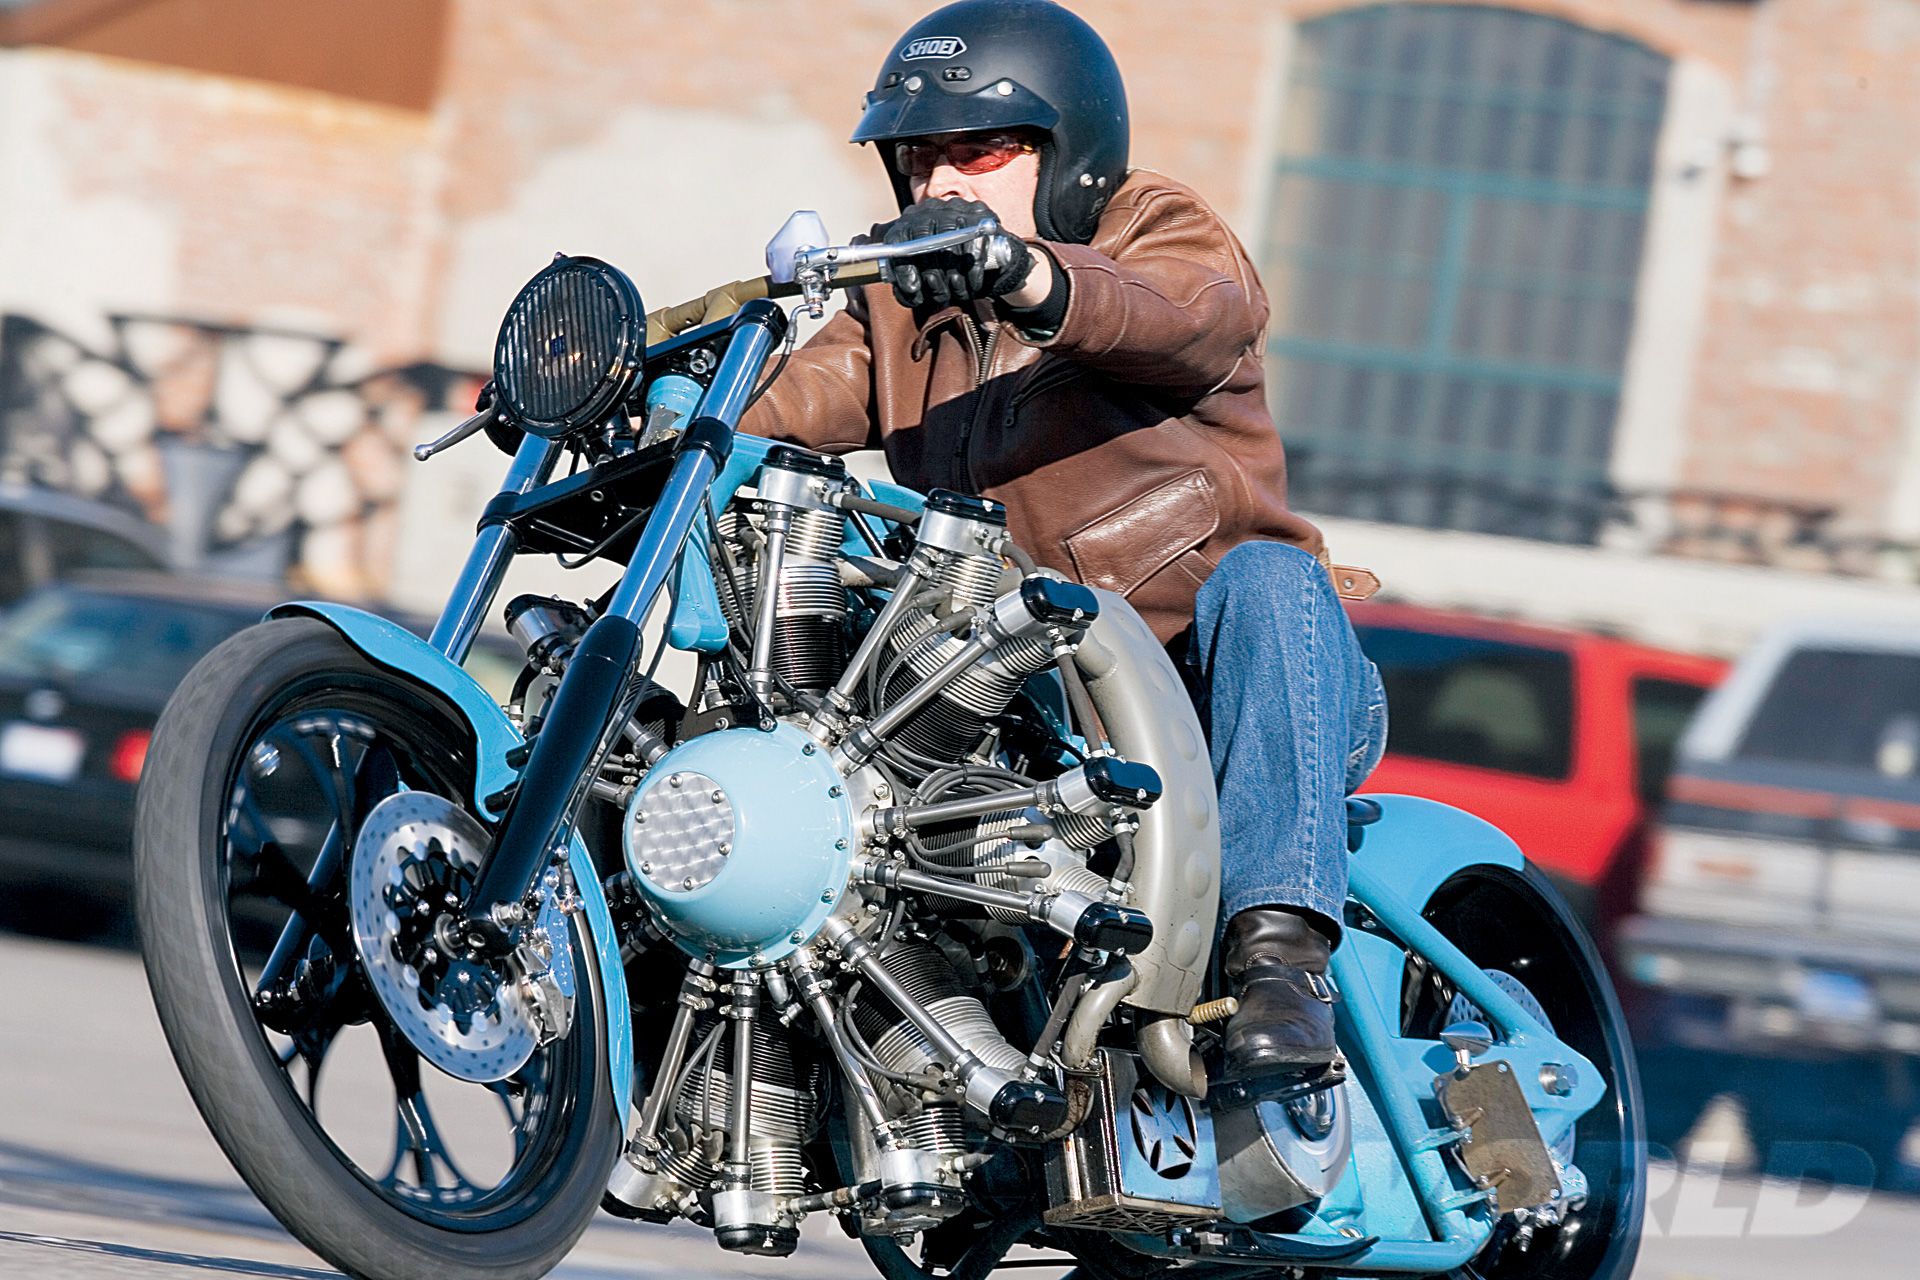 Jesse James Riding Blue radial engine motorcycle